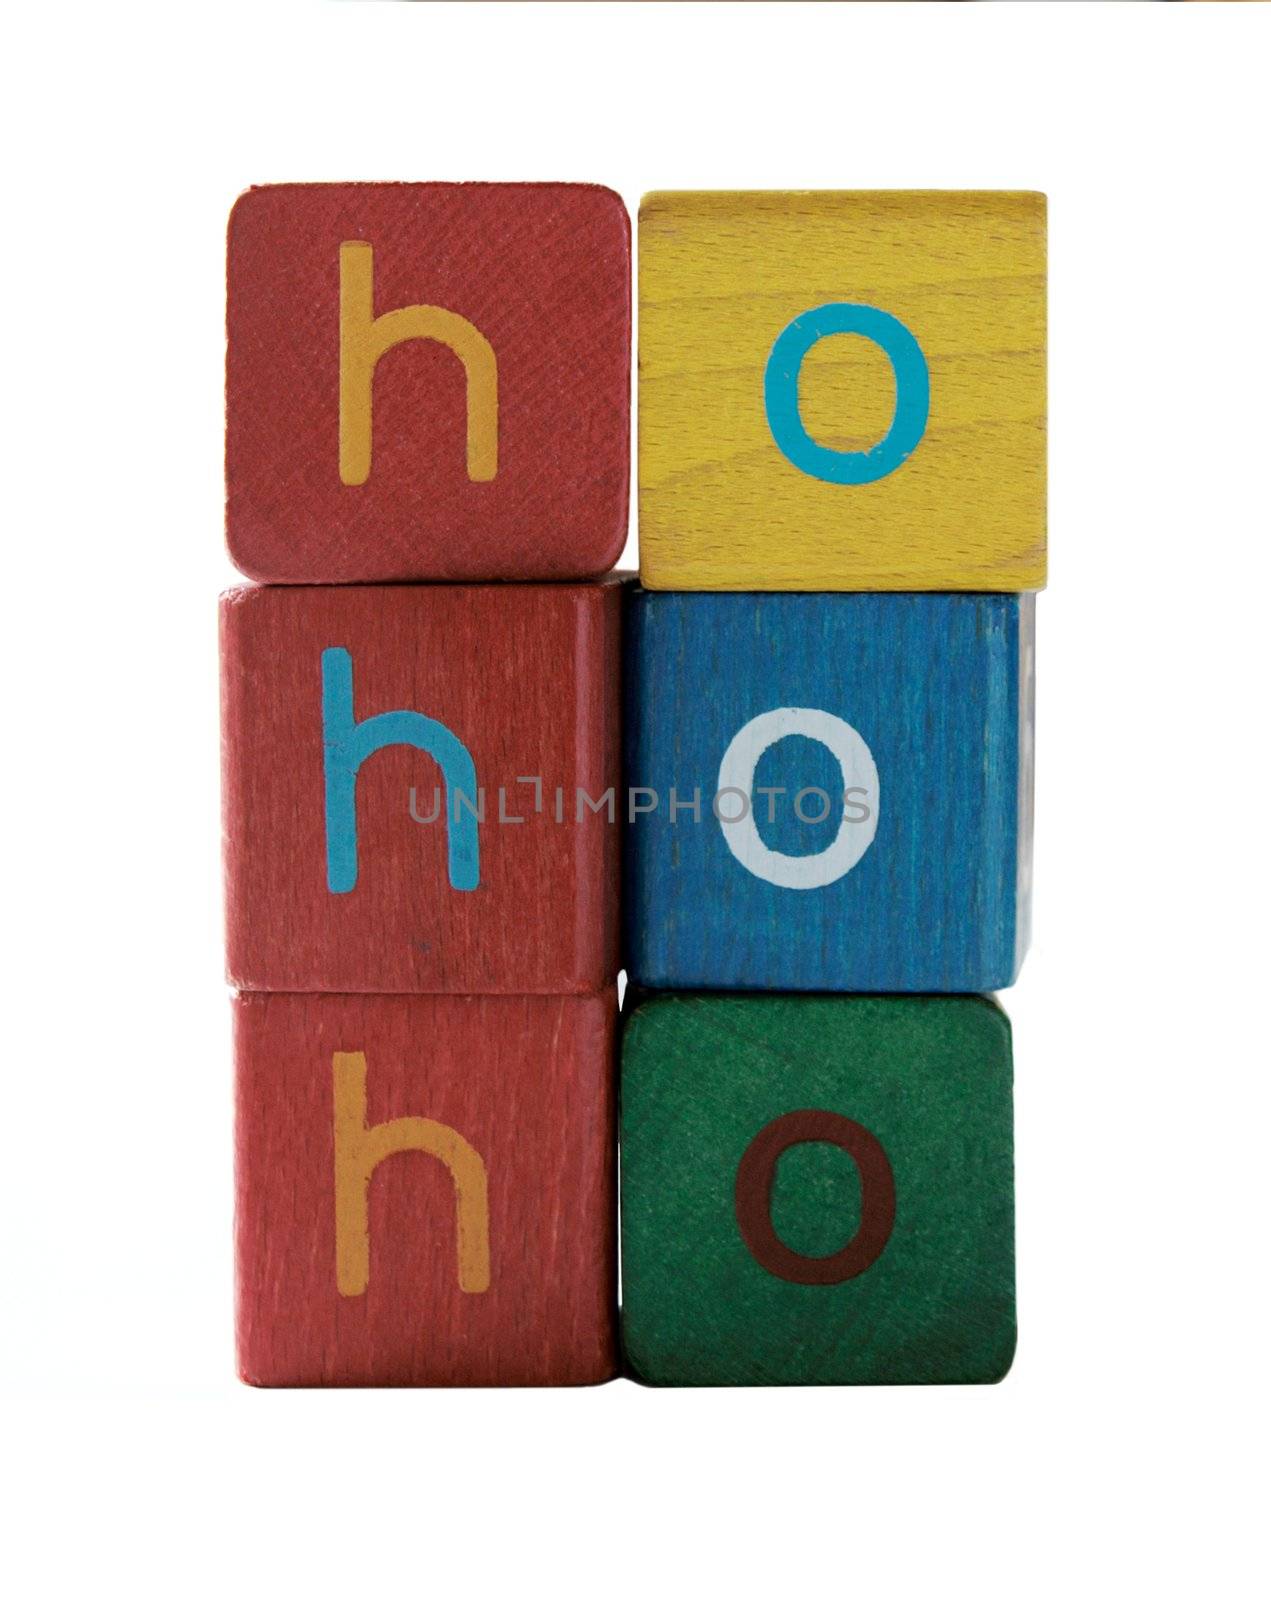 ho ho ho in children's block letters by nebari